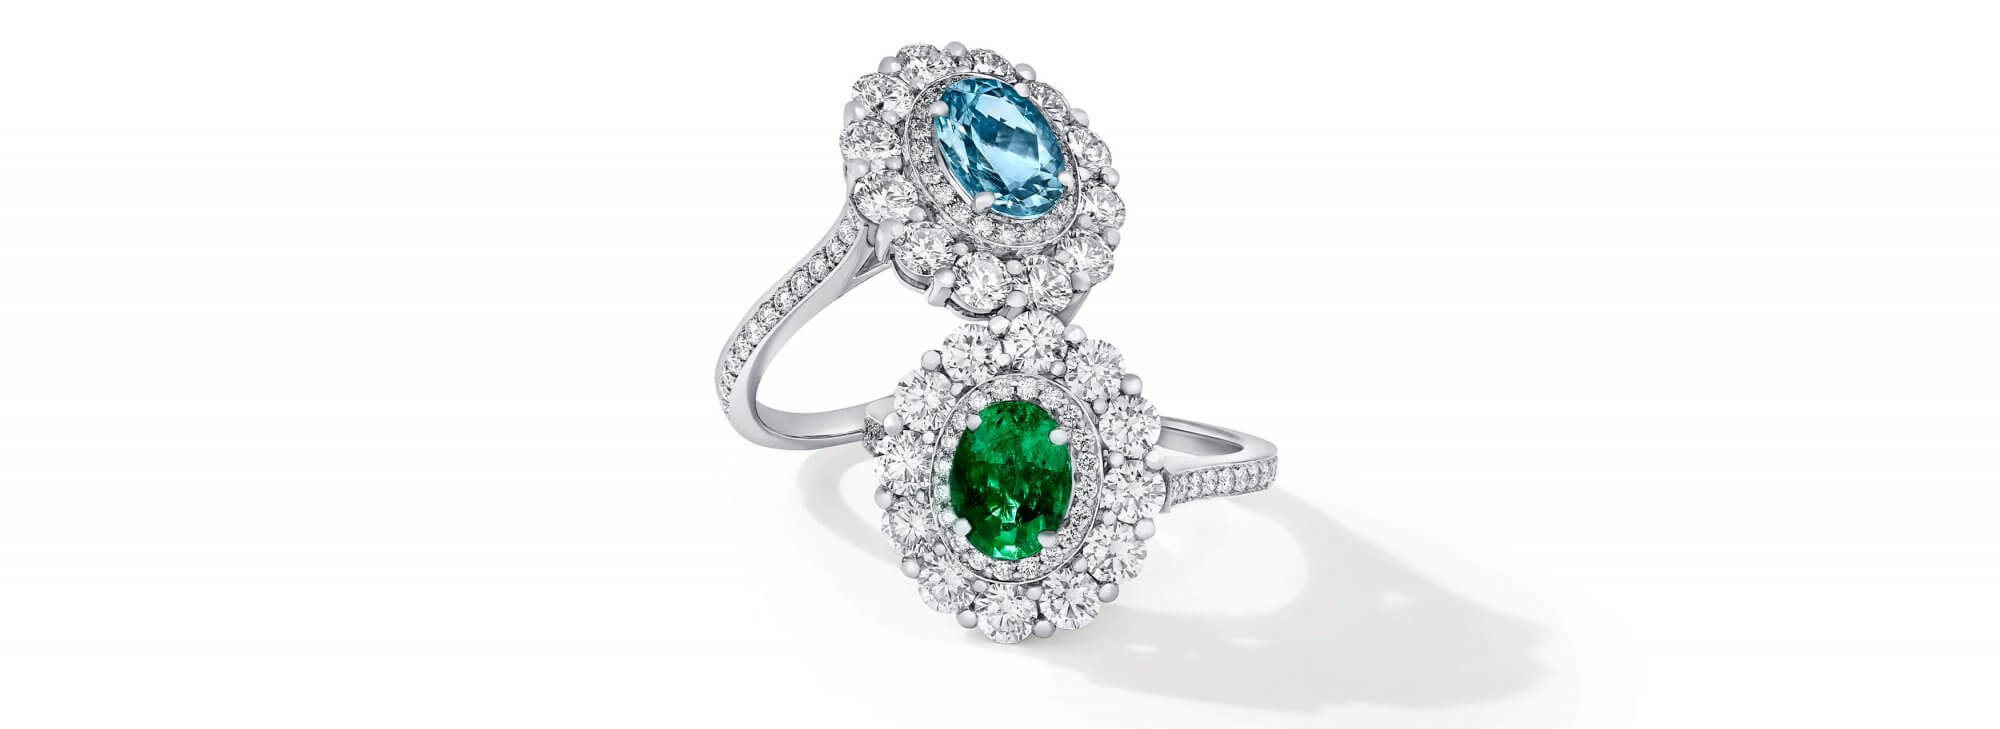 18K Gold Plated Minimalist Ring Textured Indian Design Women Engagement Ring  | eBay